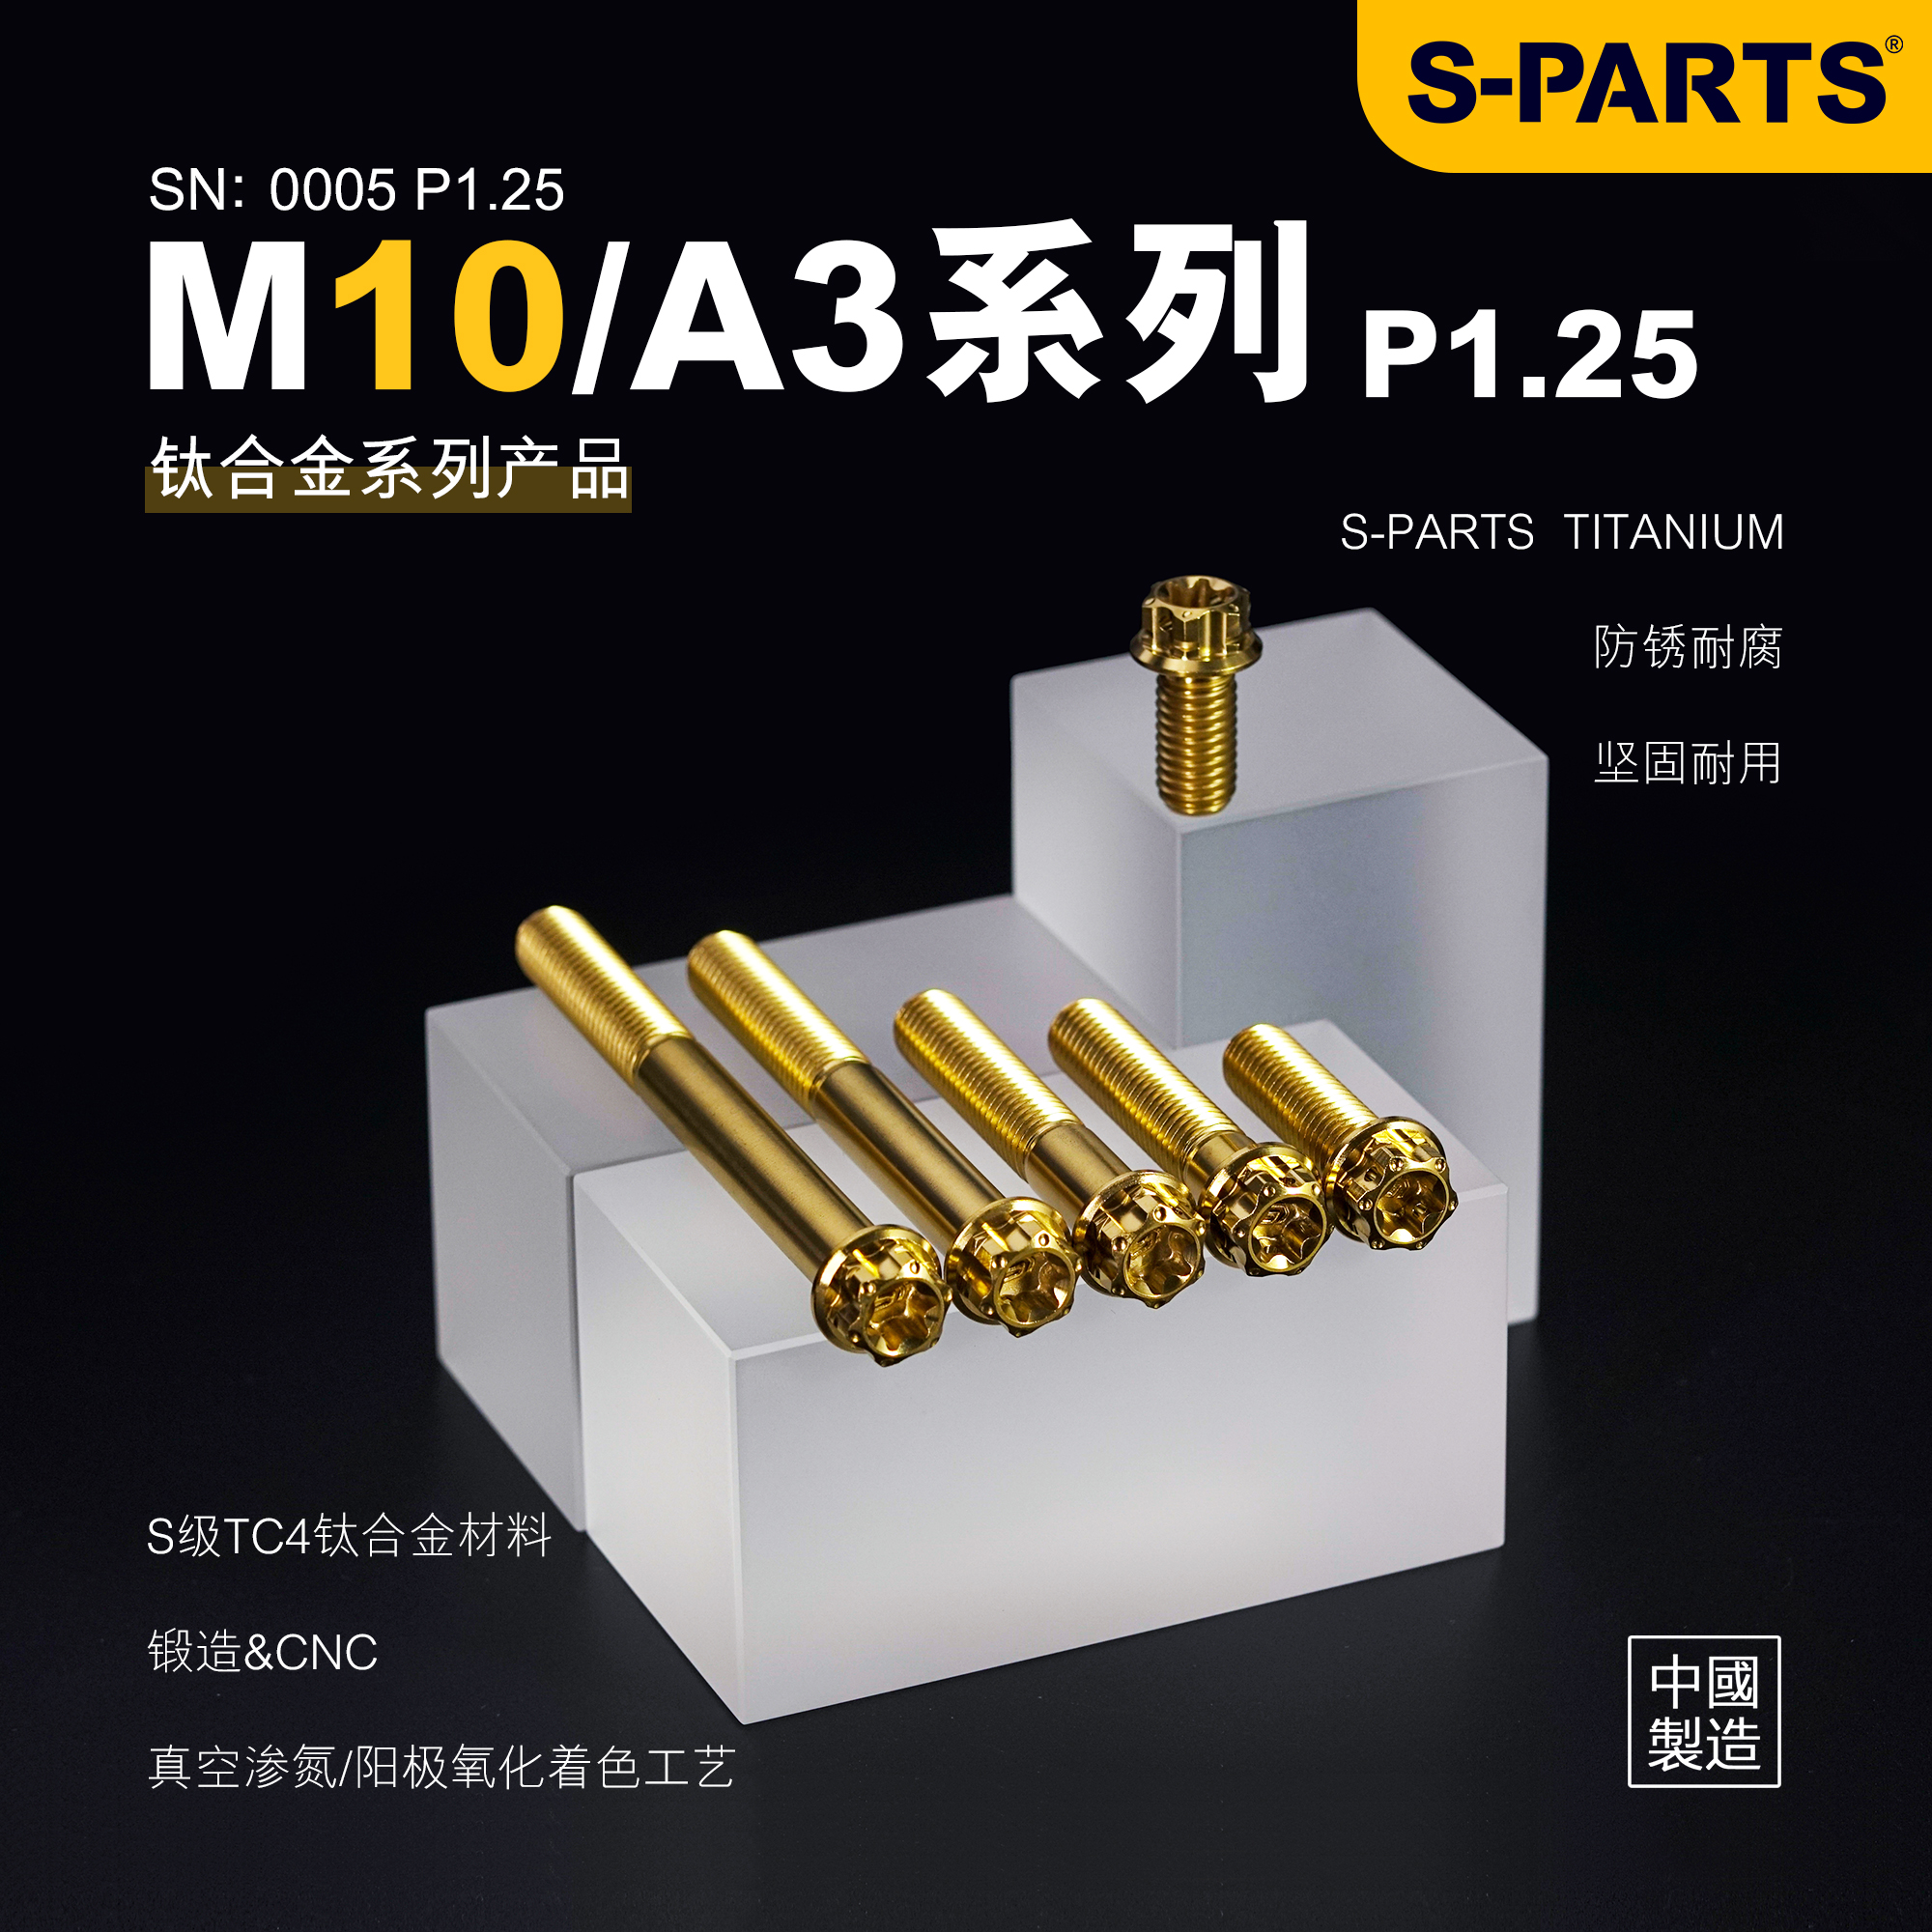 SPARTS斯坦钛合金螺丝M10标准头A3系列P1.25摩托车电动车改装金蓝